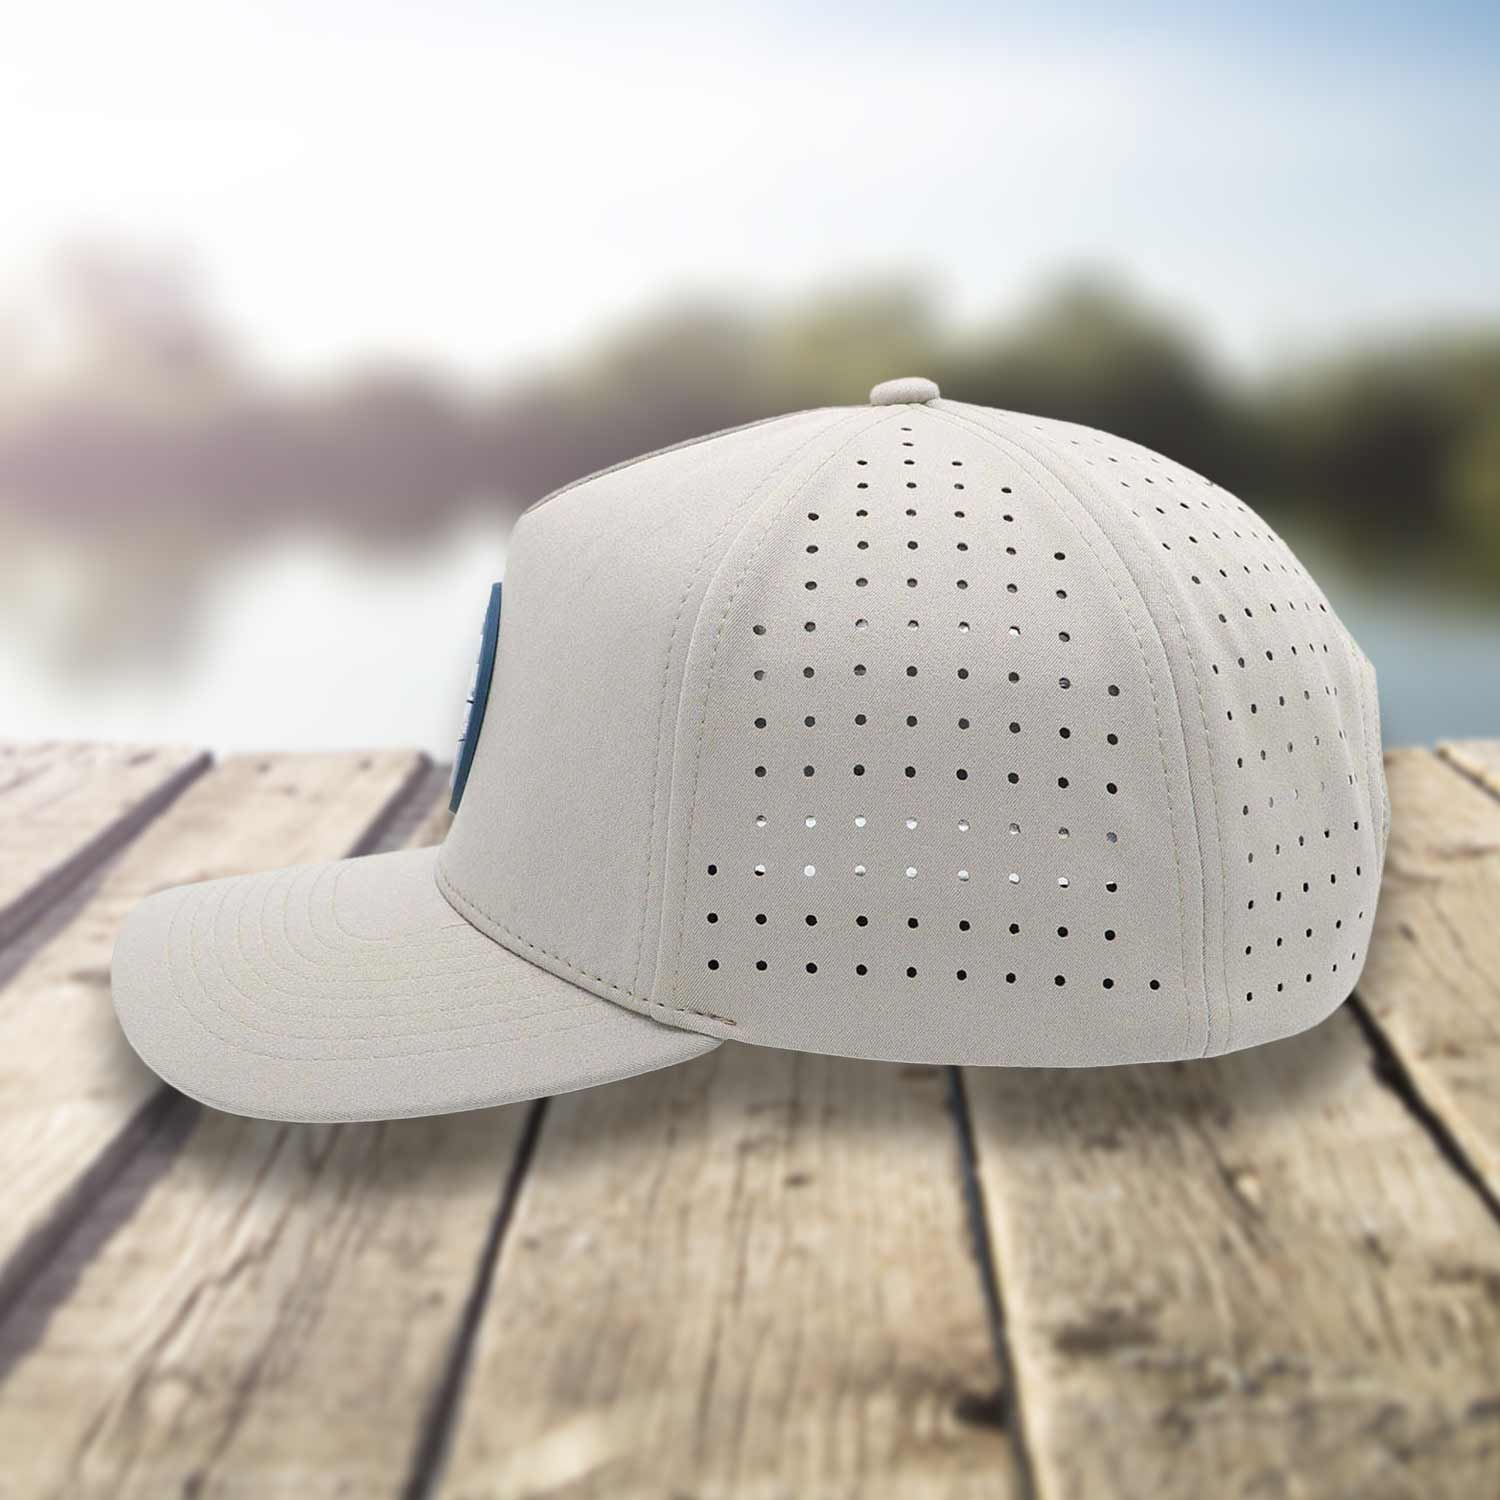 The Waterman Snapback Hat | Six Knots - Boating & Fishing Apparel